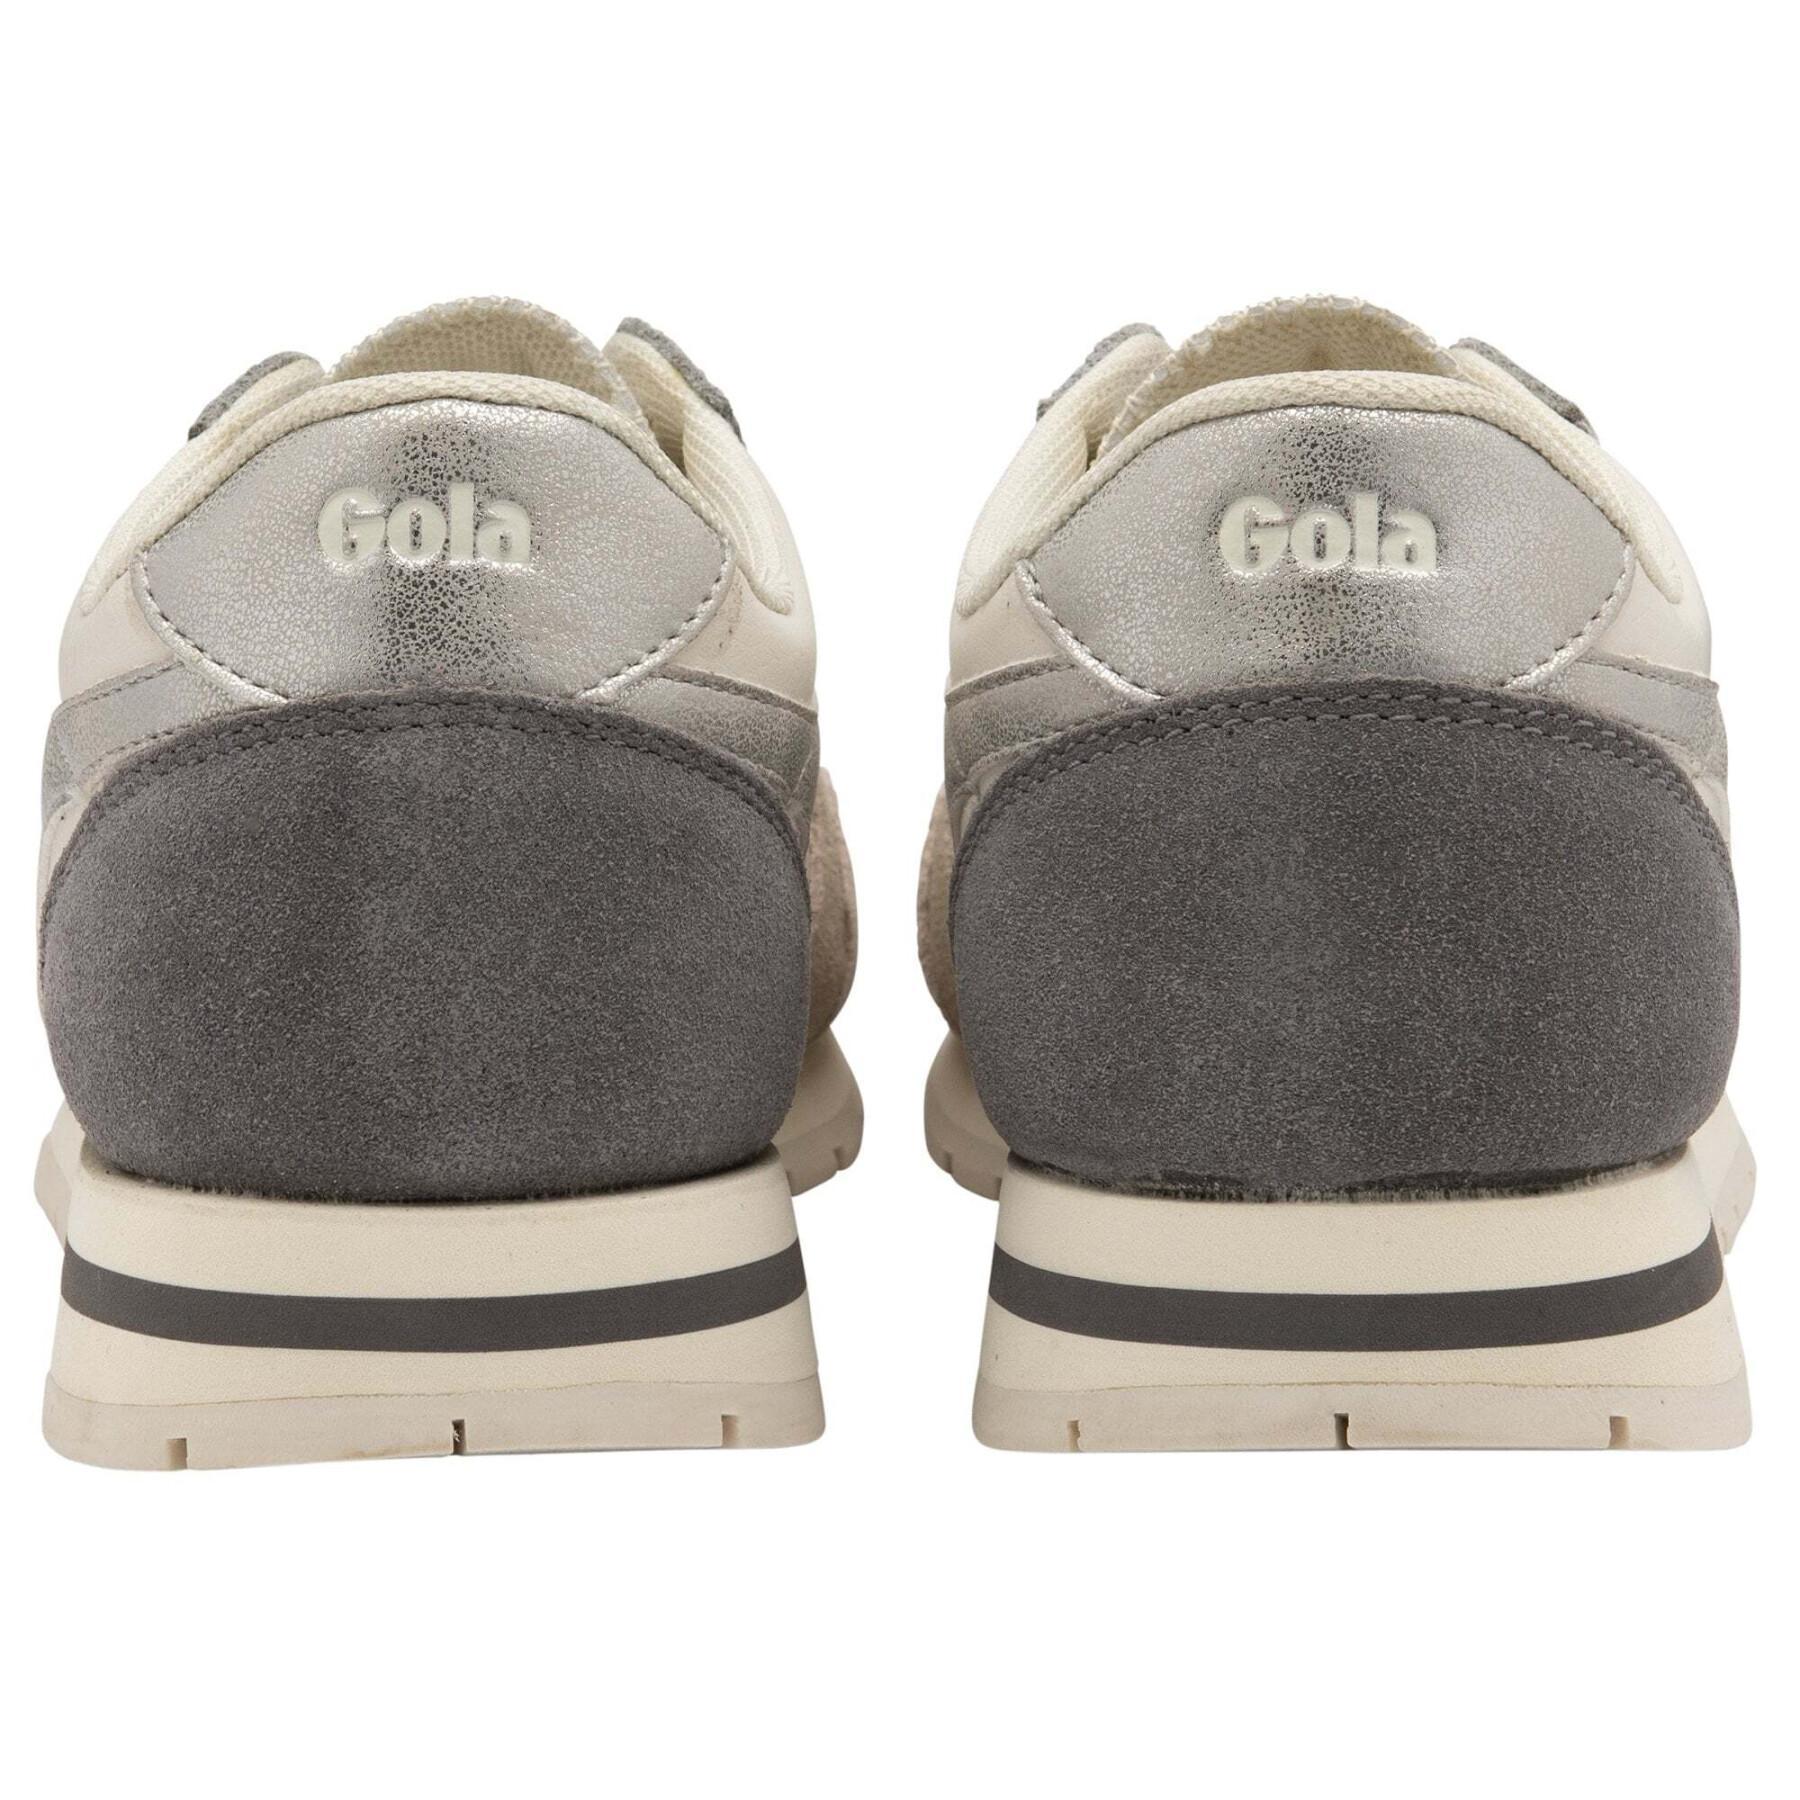 Women's sneakers Gola Daytona